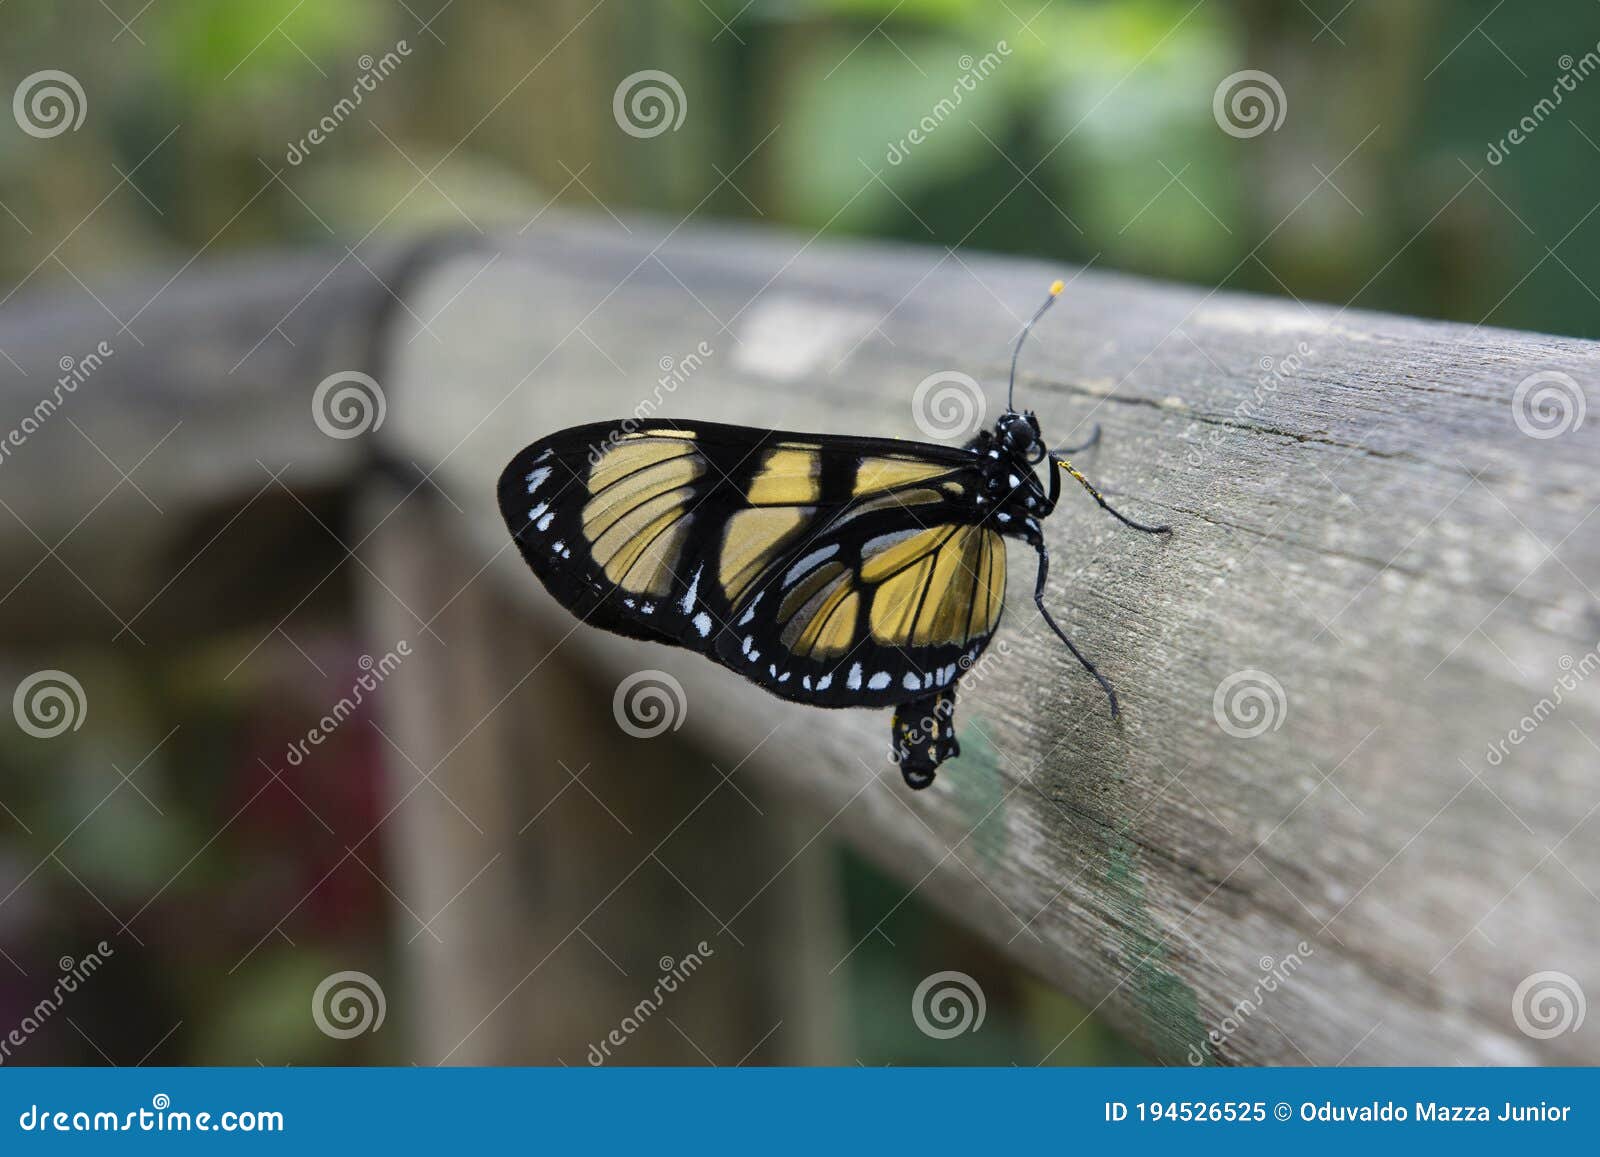 black and yellow butterflies at campos do jordÃÂ£o, brazil